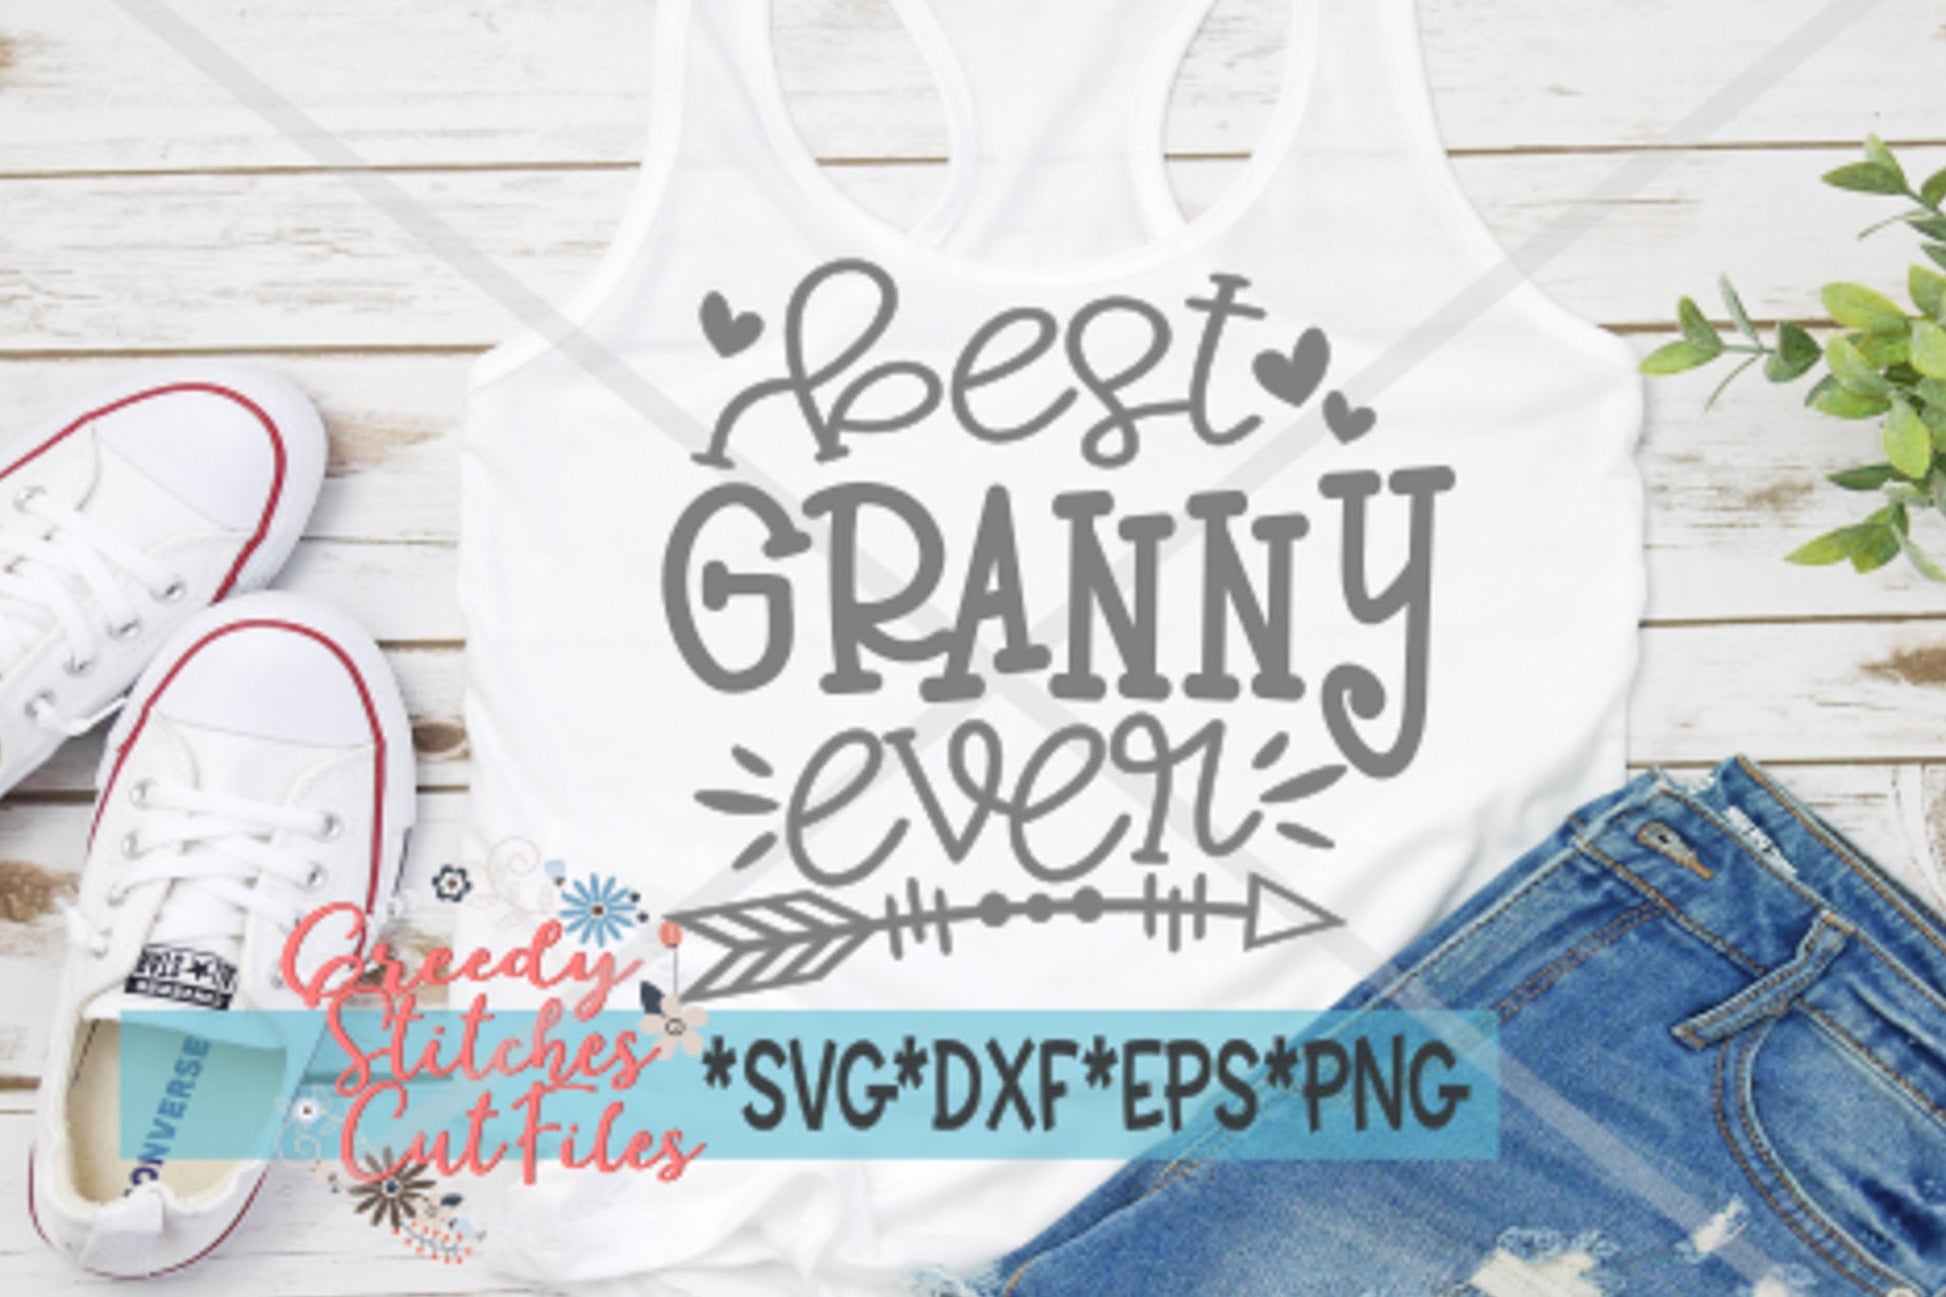 Best Granny Ever SvG | Mother&#39;s Day SVG | Mother&#39;s Day | Granny SvG | Granny | Best Granny Ever svg, dxf, eps, png Instant Download Cut File